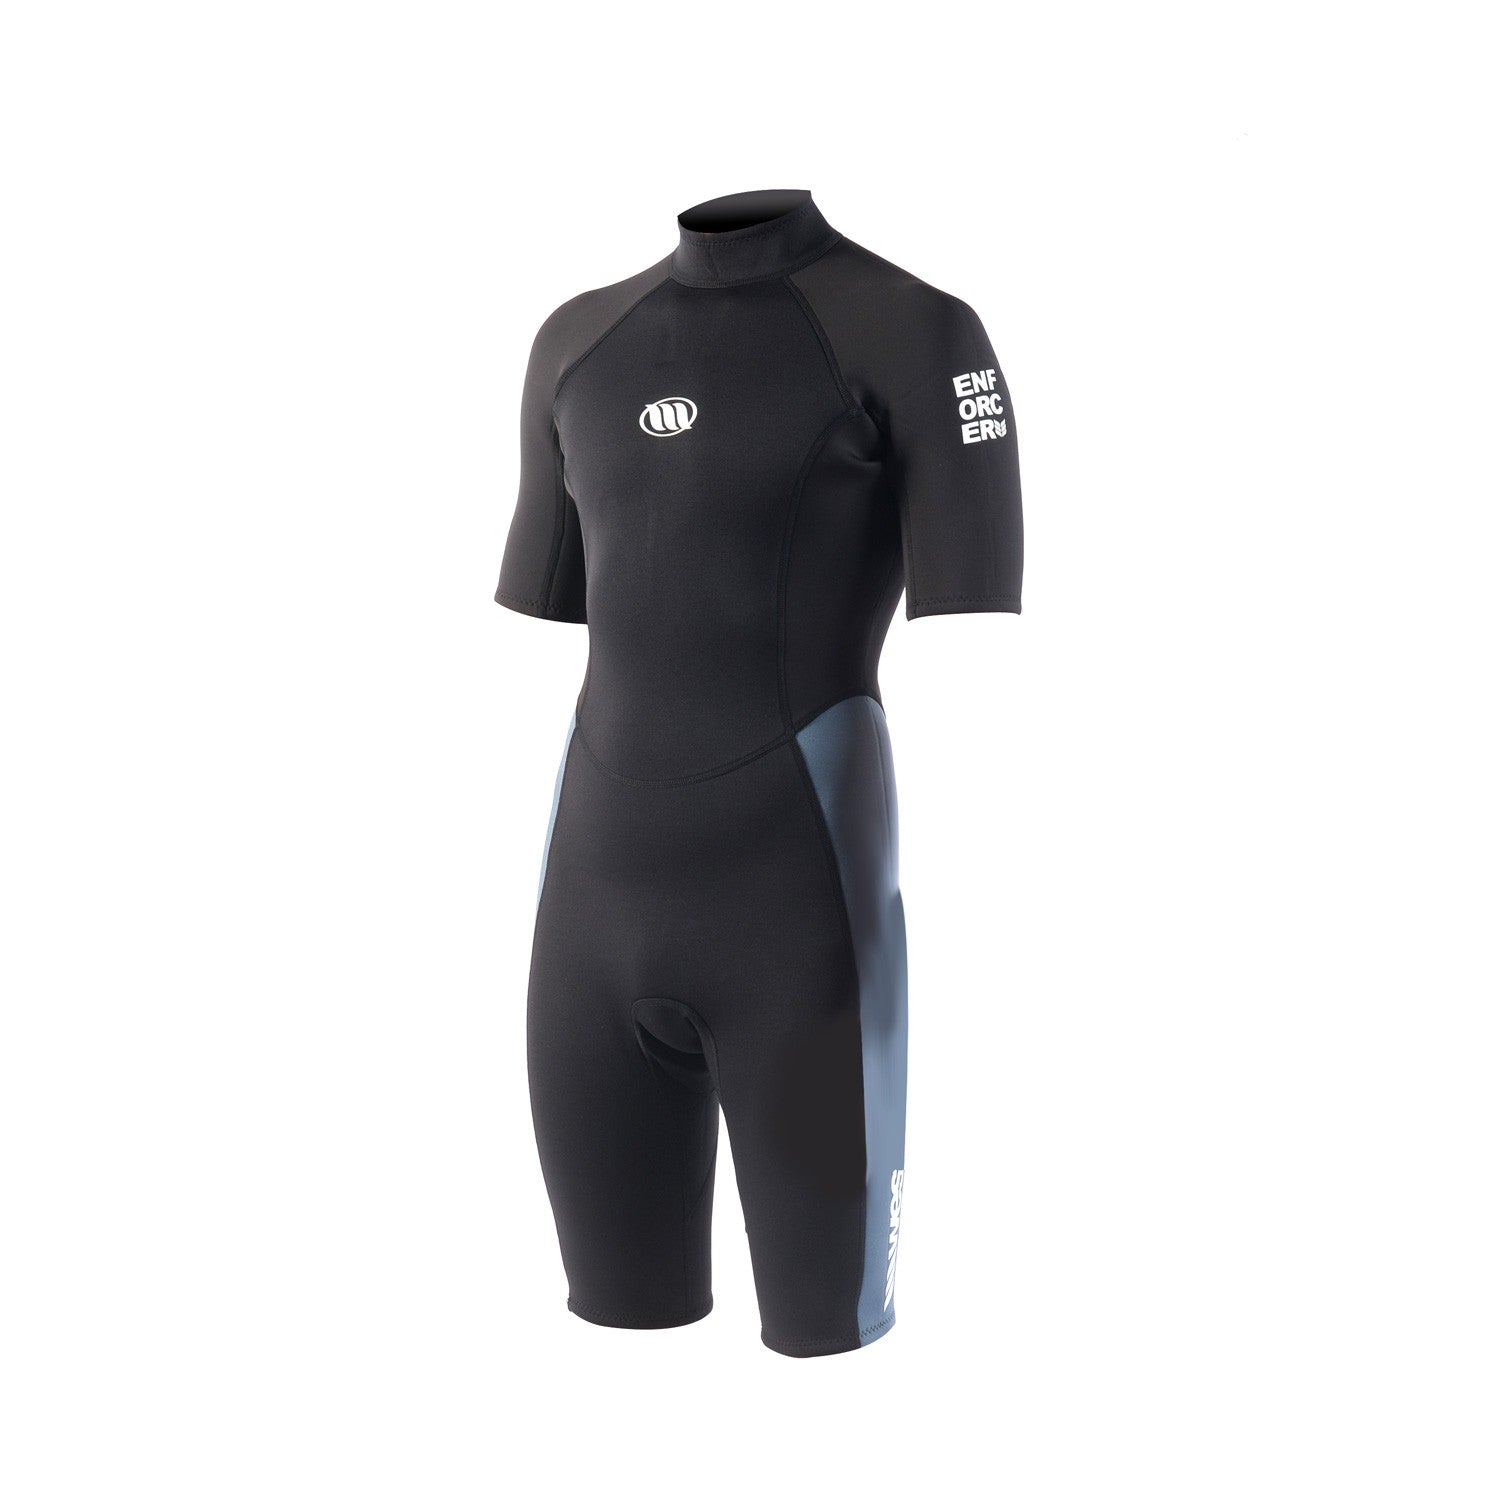 WEST - Surf wetsuit - Enforcer-S Shorty 2/2mm back zip - Graphite